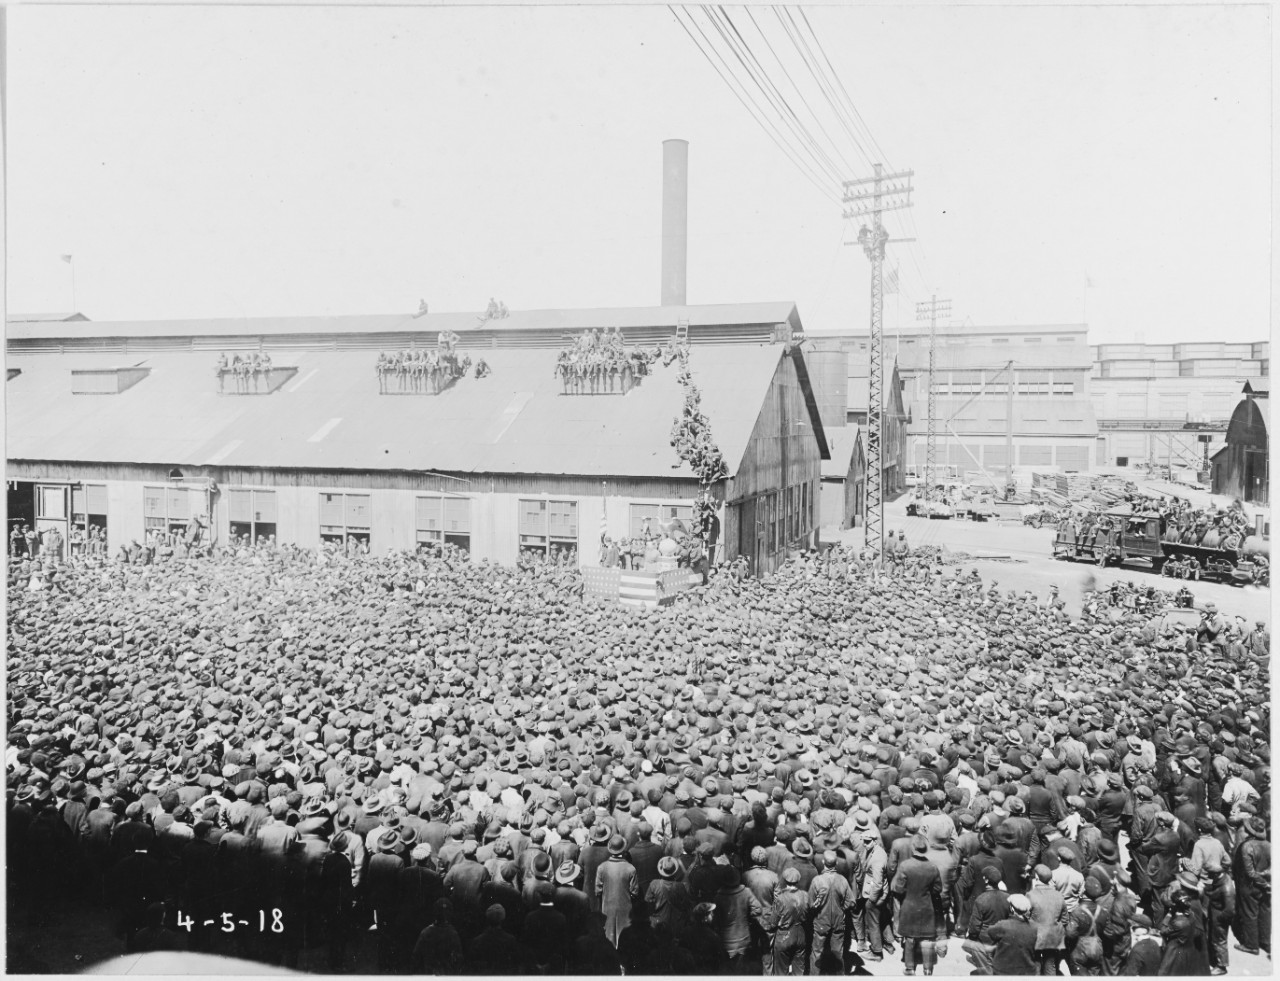 Shipbuilders at patriotic meetings held in the shipyard during the war. Bethlehem Shipbuilding Corporation. April 5, 1918